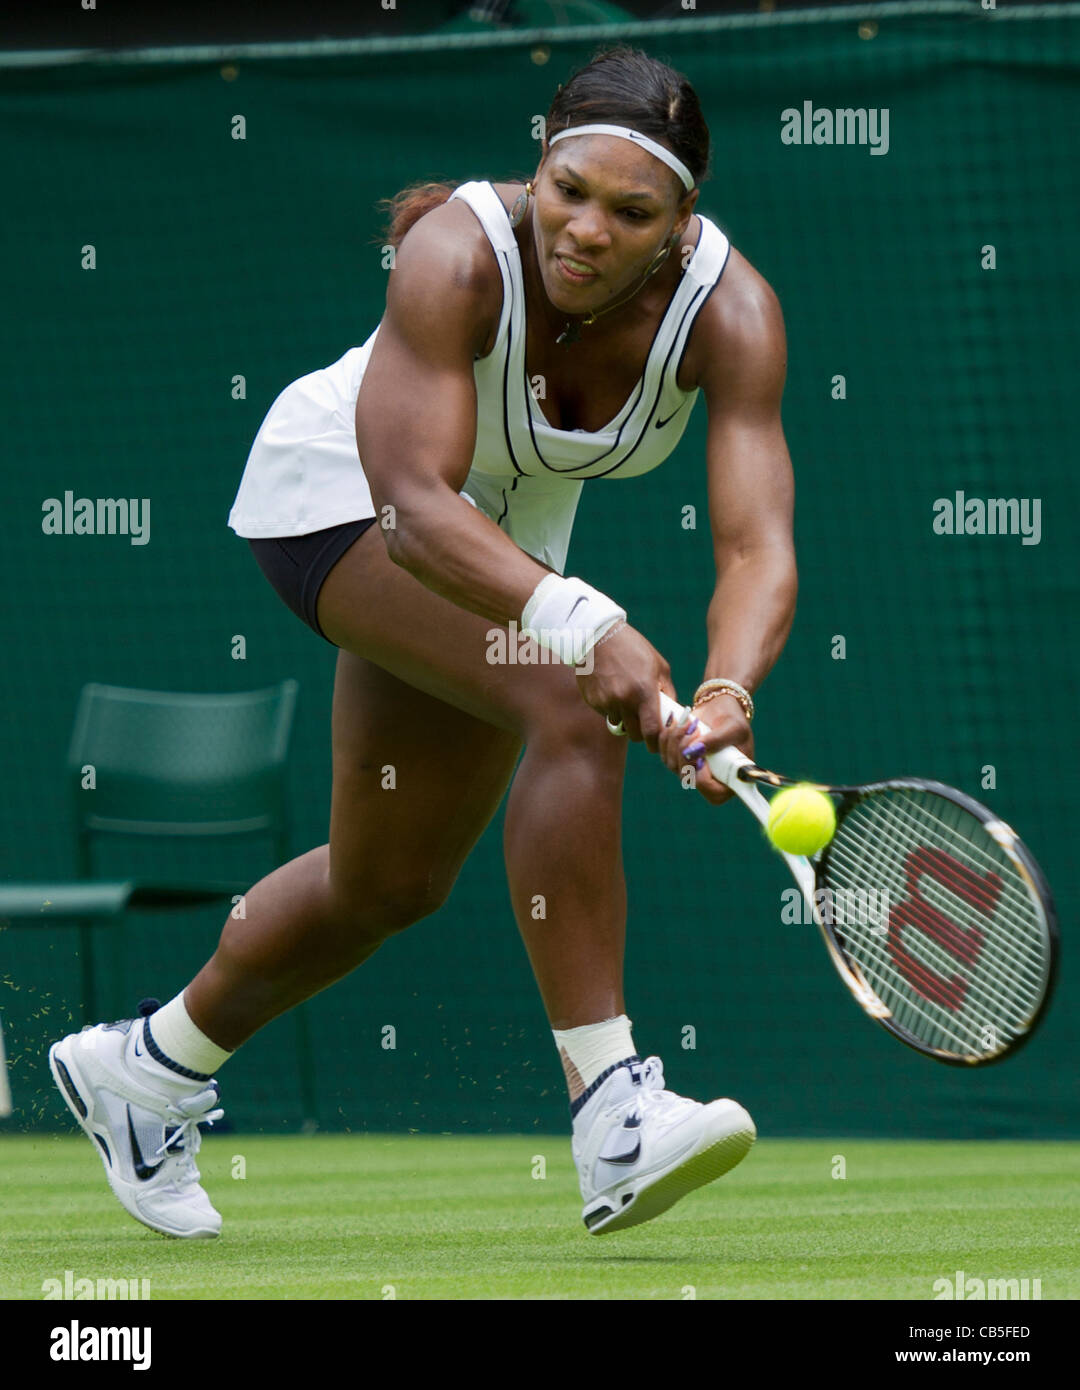 21.06.2011. Aravane Rezai FRA V Serena Williams USA (7). Serena in Aktion. Das Tennisturnier von Wimbledon. Stockfoto